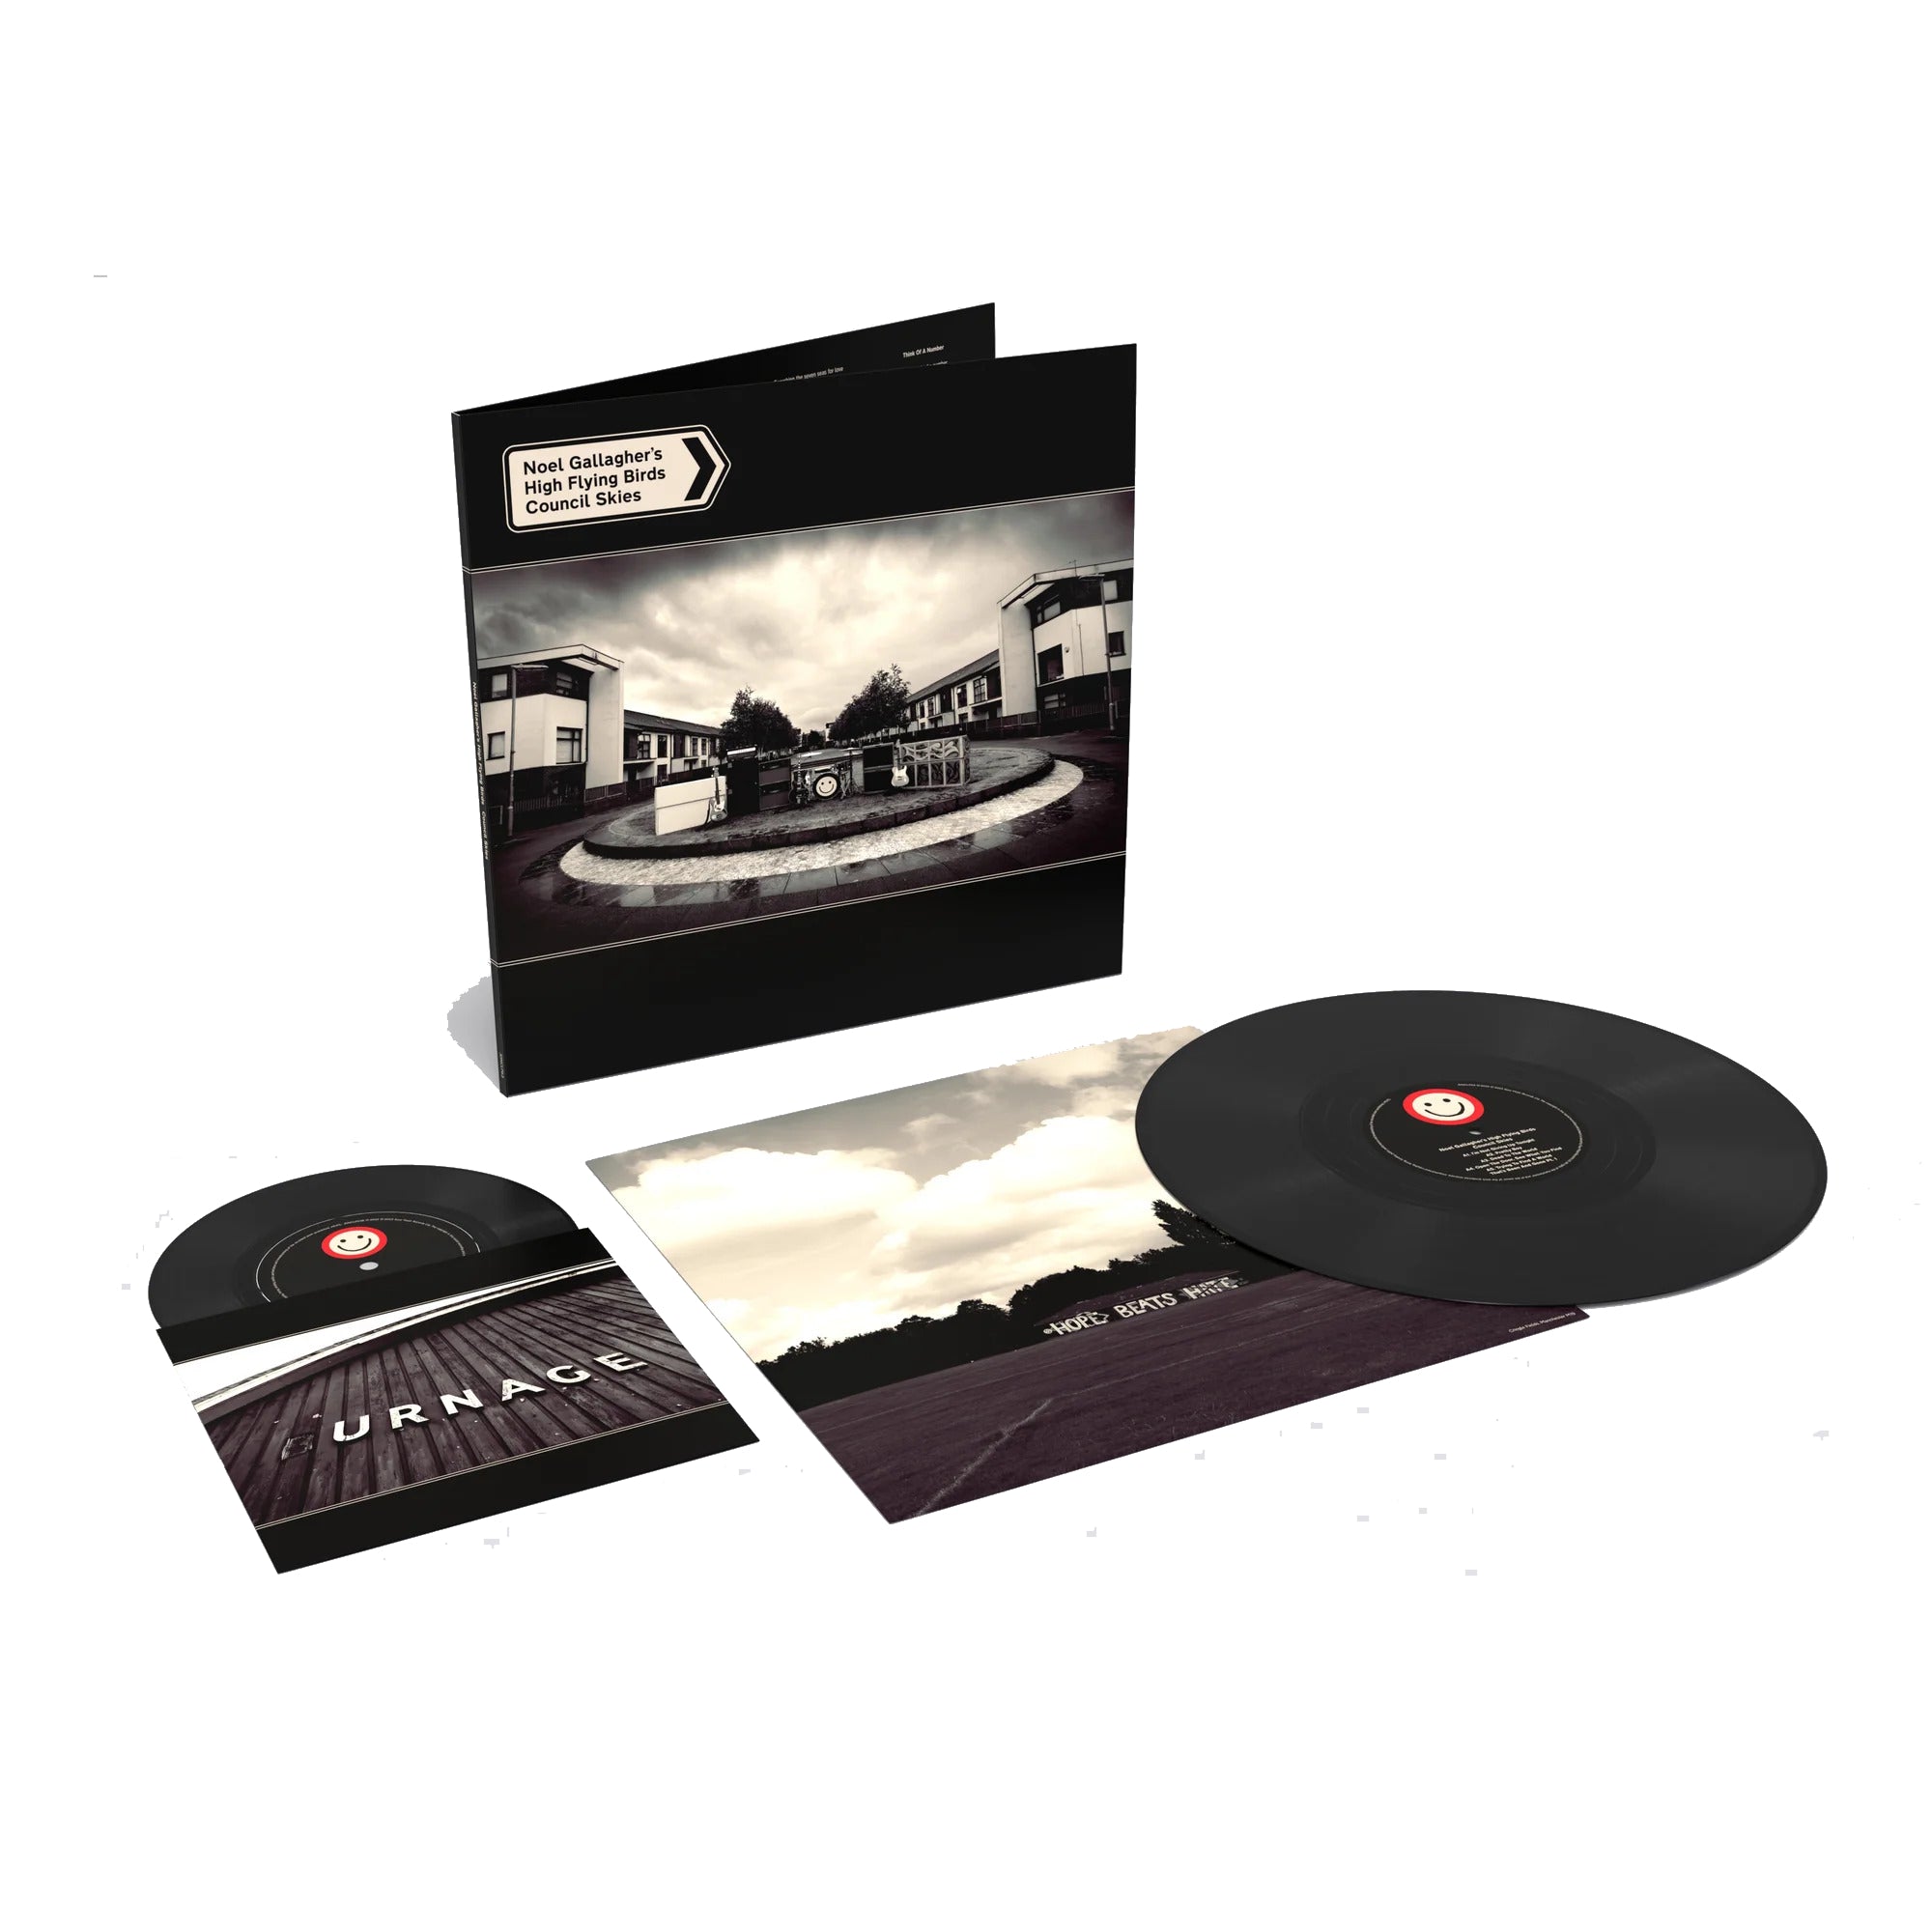 Noel Gallagher's High Flying Birds - Council Skies: Vinyl LP + Bonus 7" Single